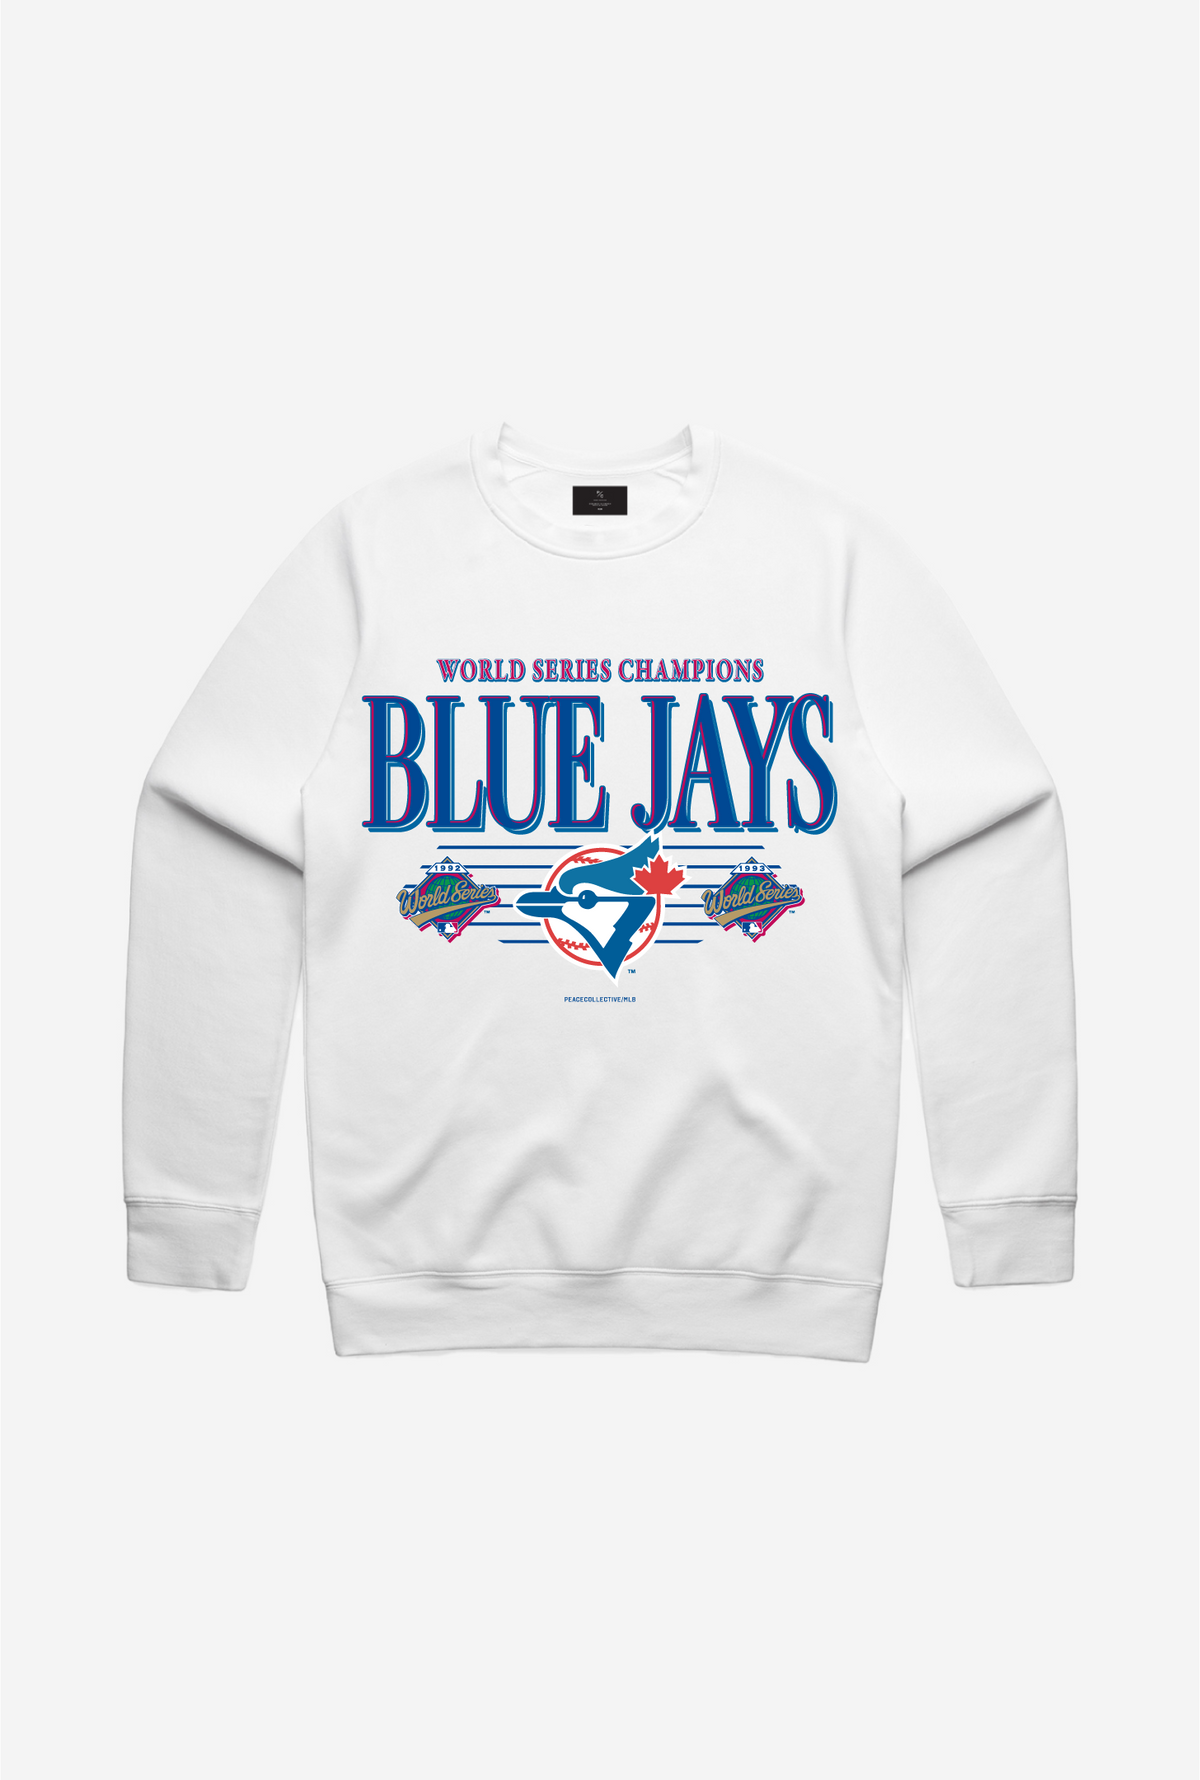 Toronto Blue Jays Throwback Crewneck - White